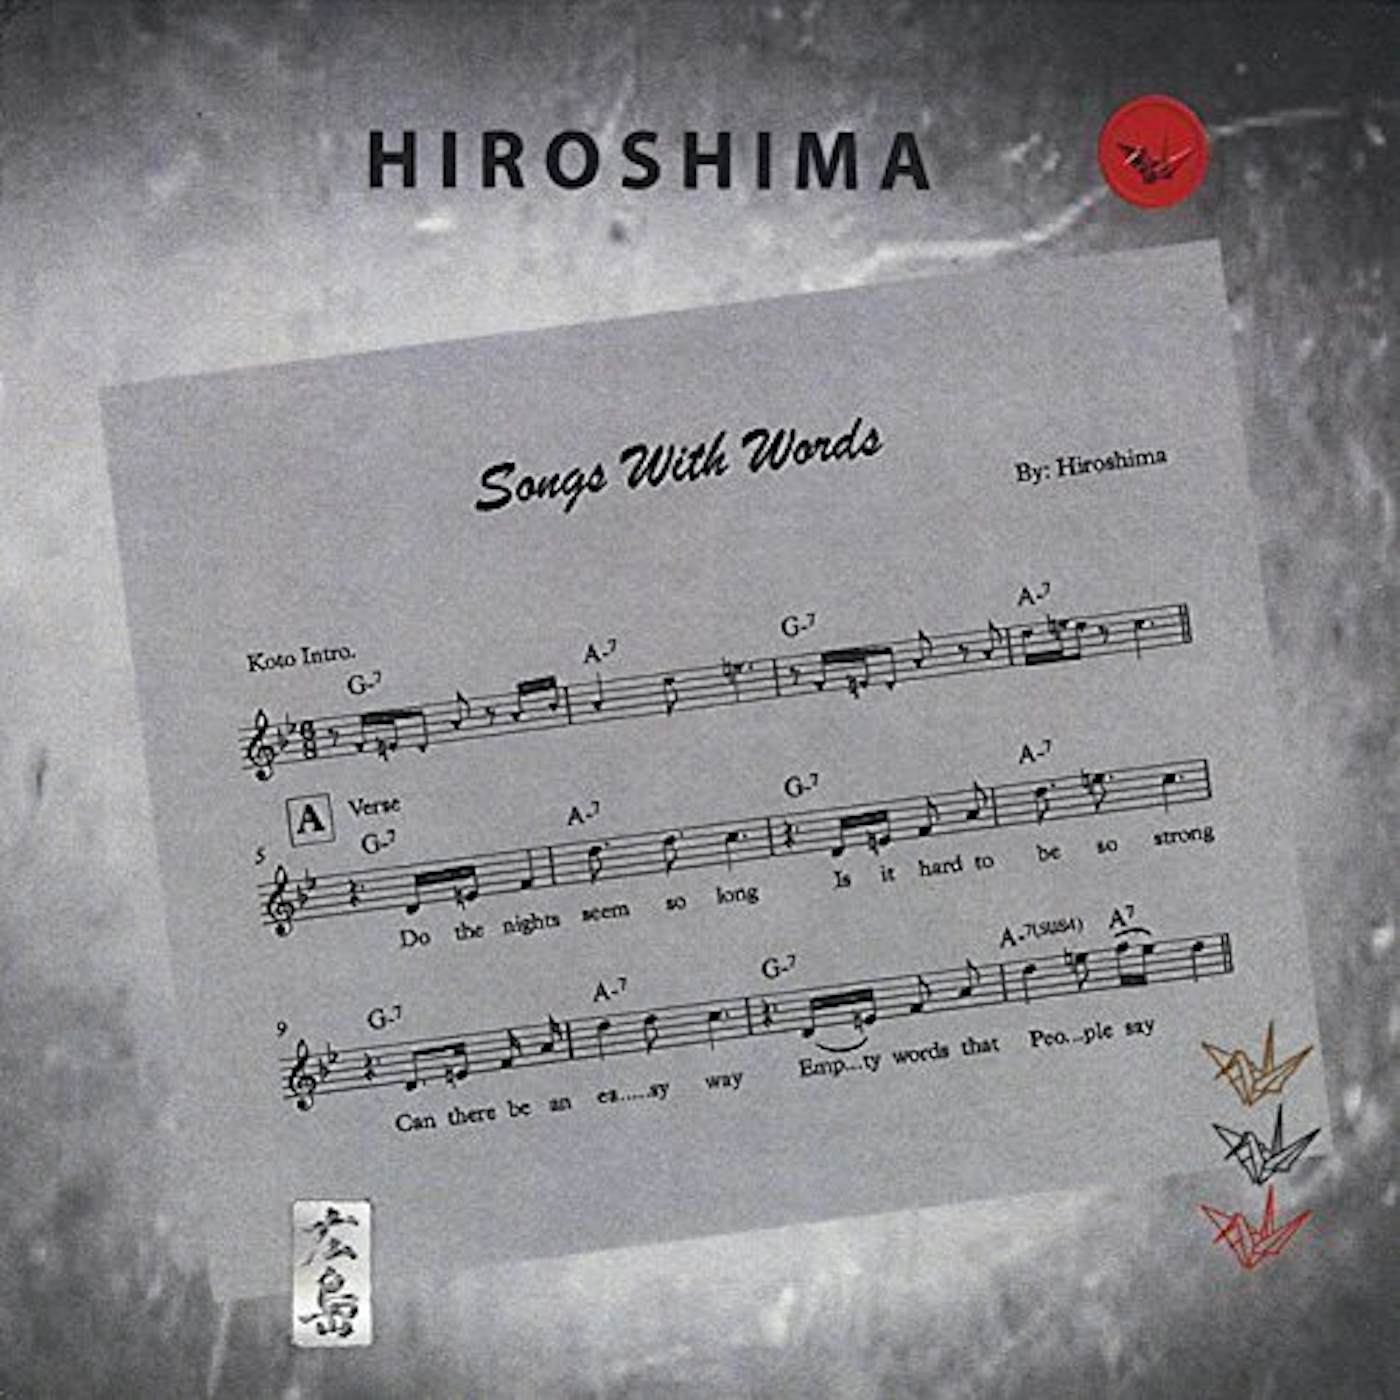 Hiroshima SONGS WITH WORDS CD